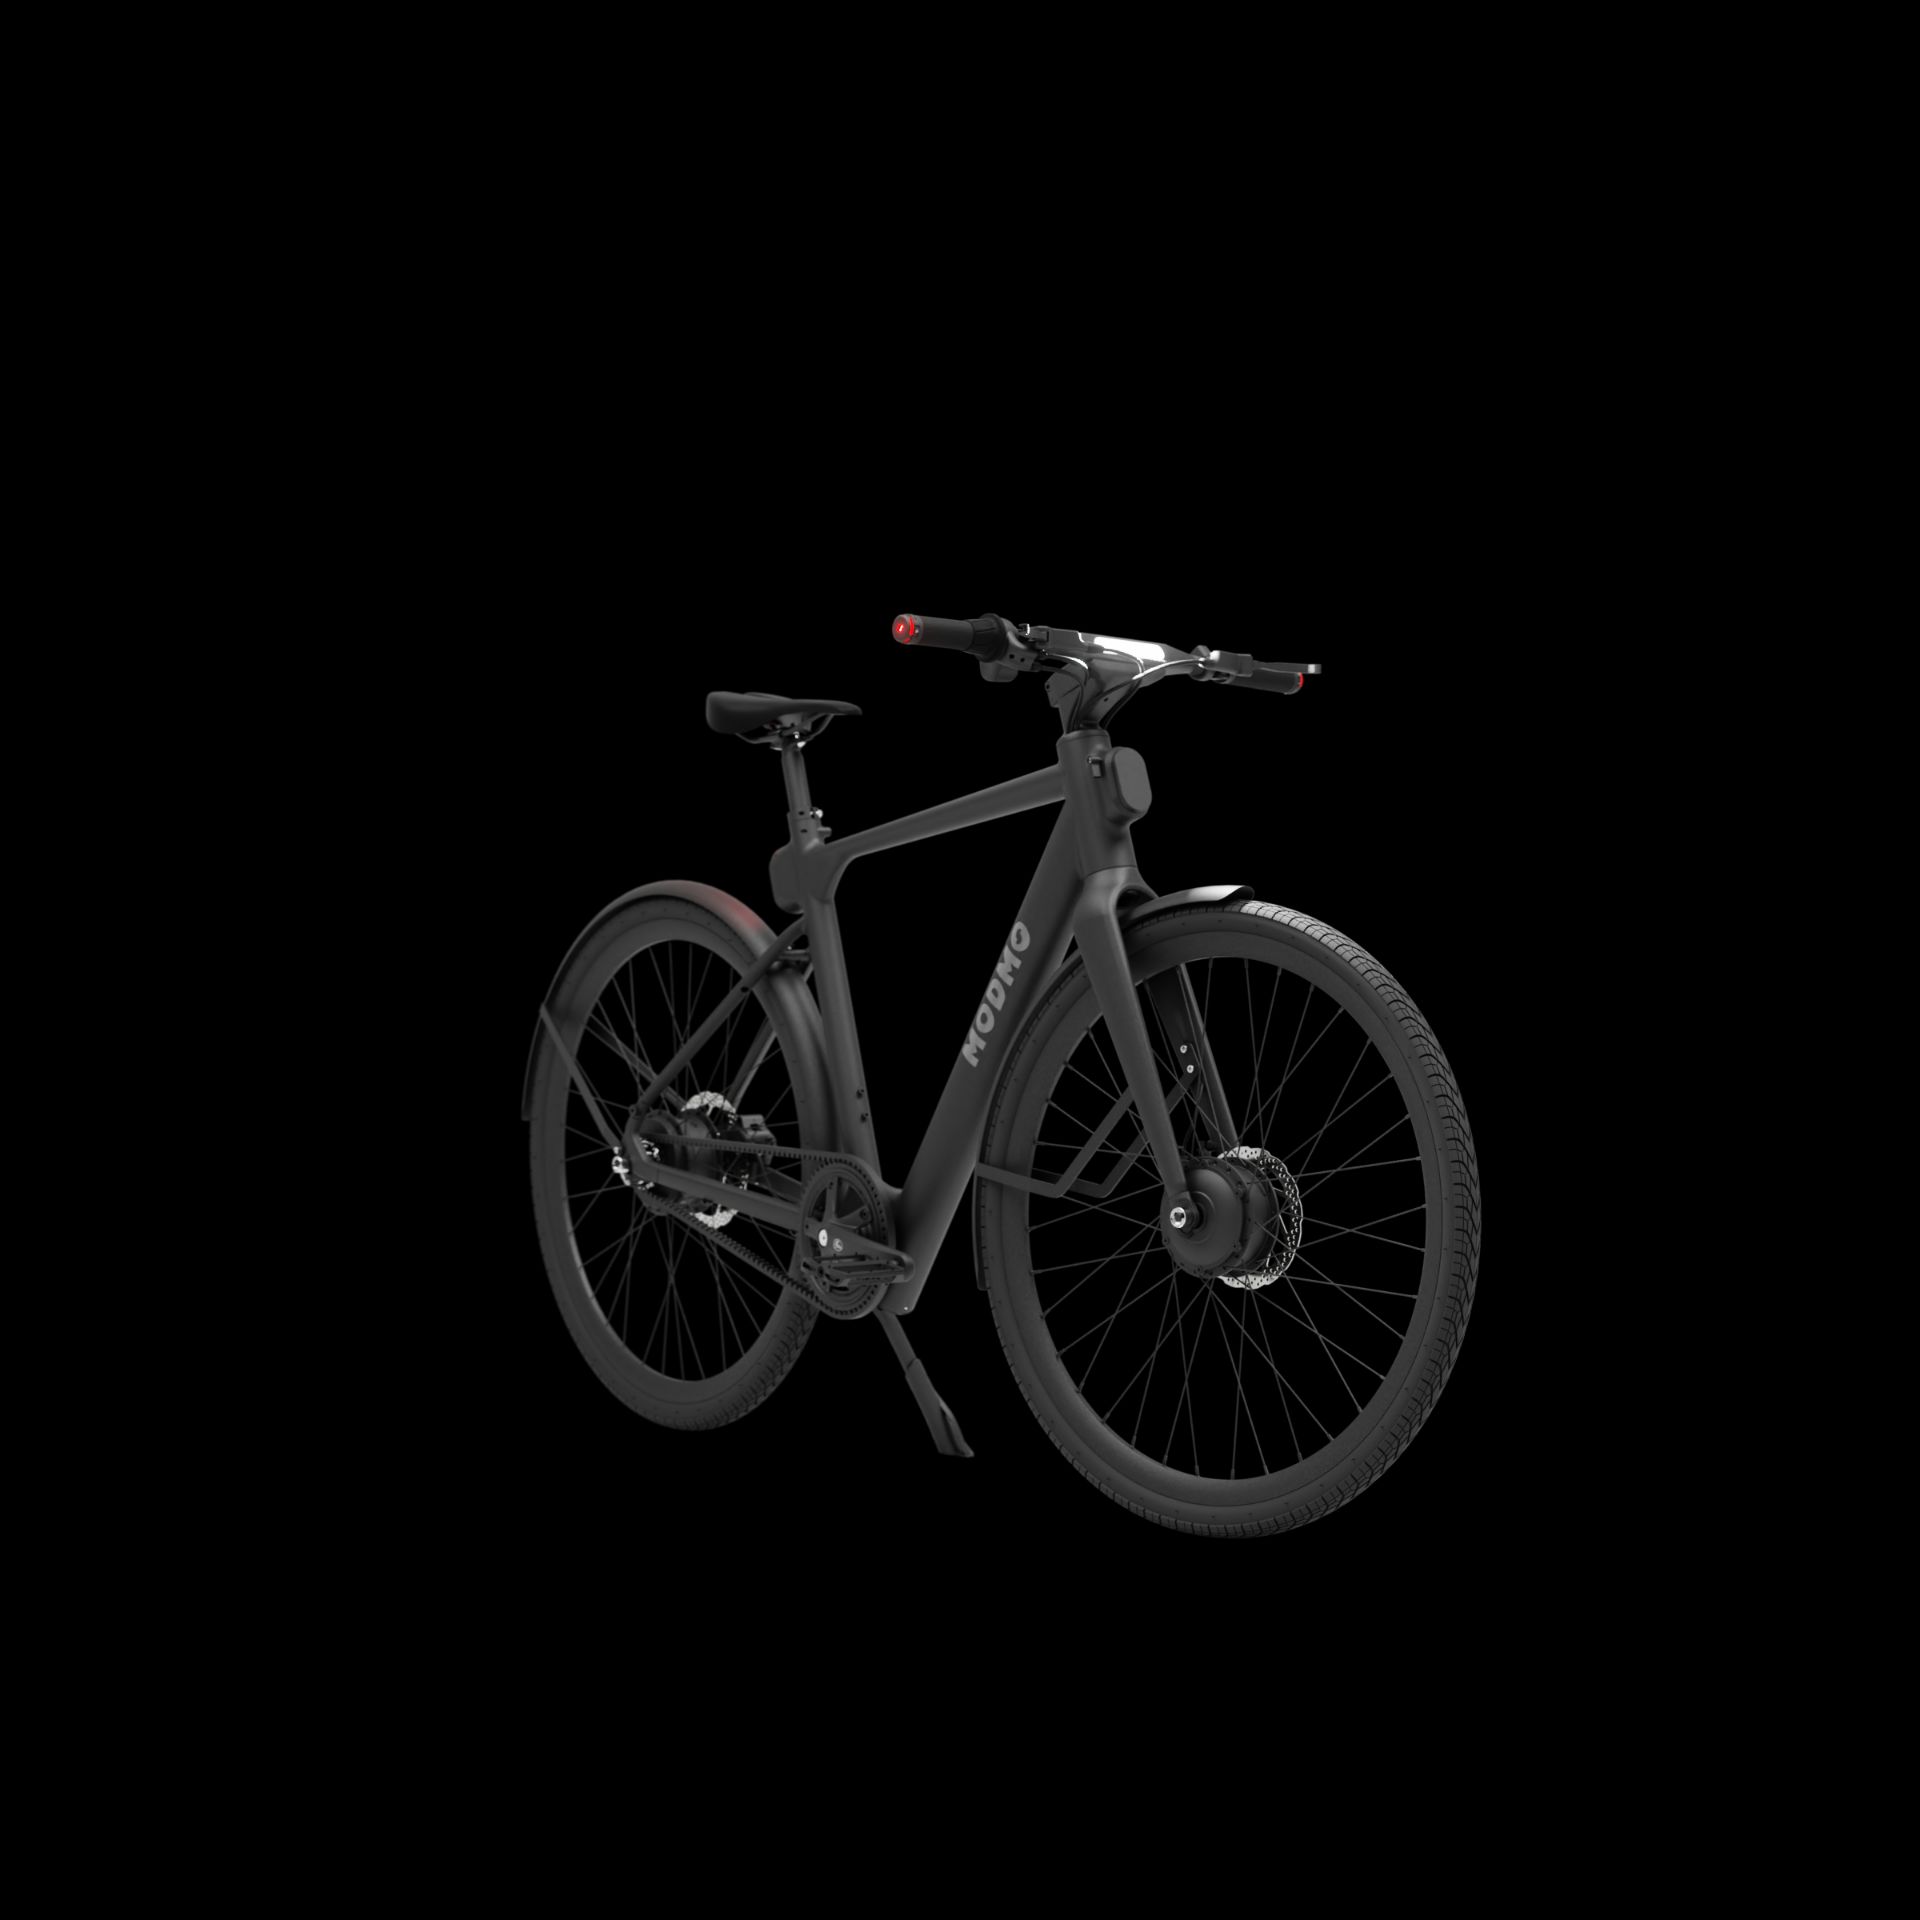 Modmo Saigon+ Electric Bicycle - RRP £2800 - Size M (Rider: 155-175cm) - Image 6 of 19